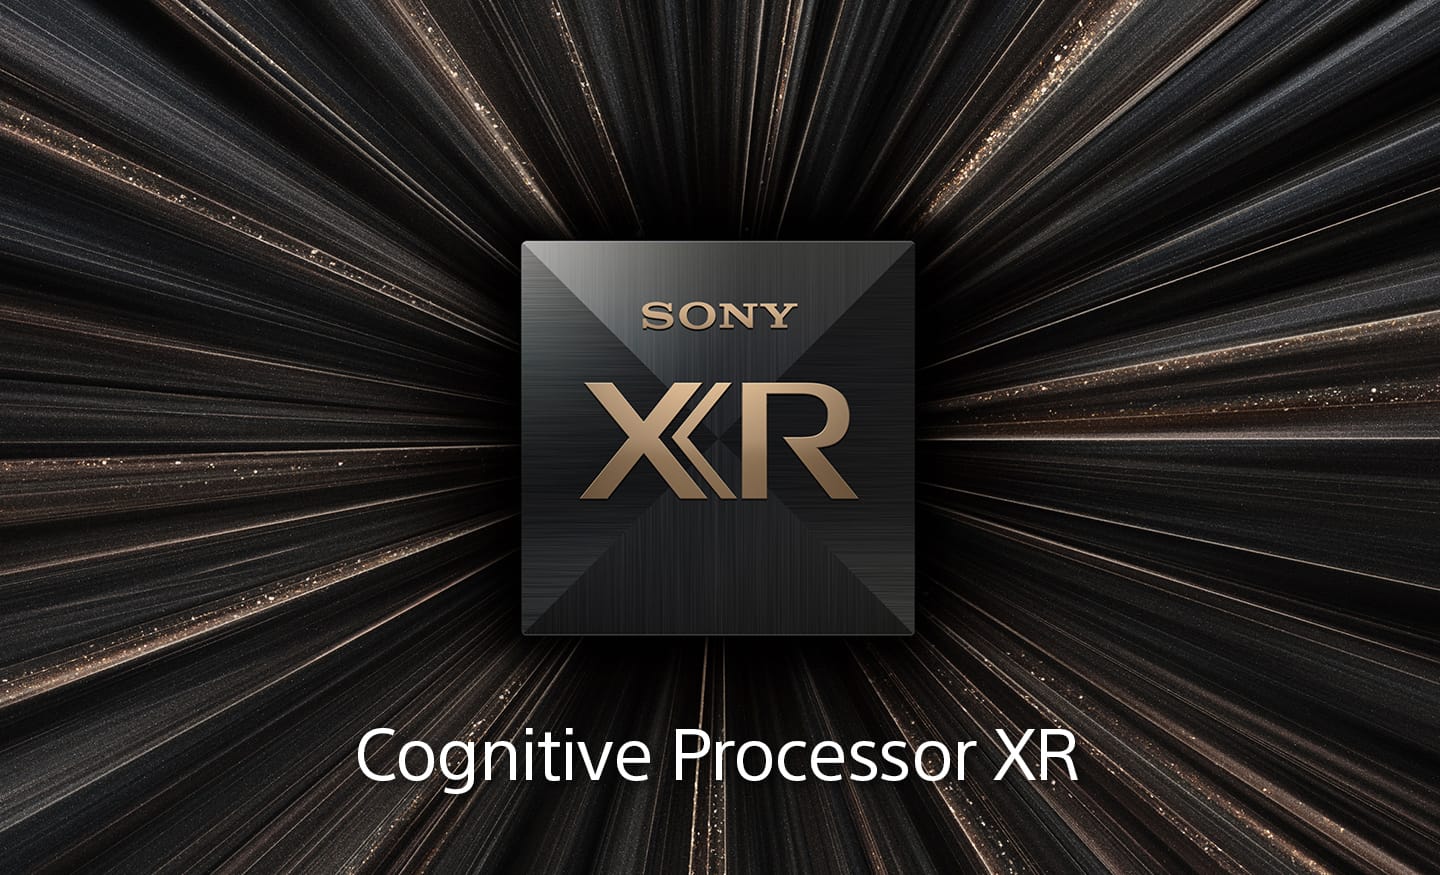 Sony 4K HDR Processor XR